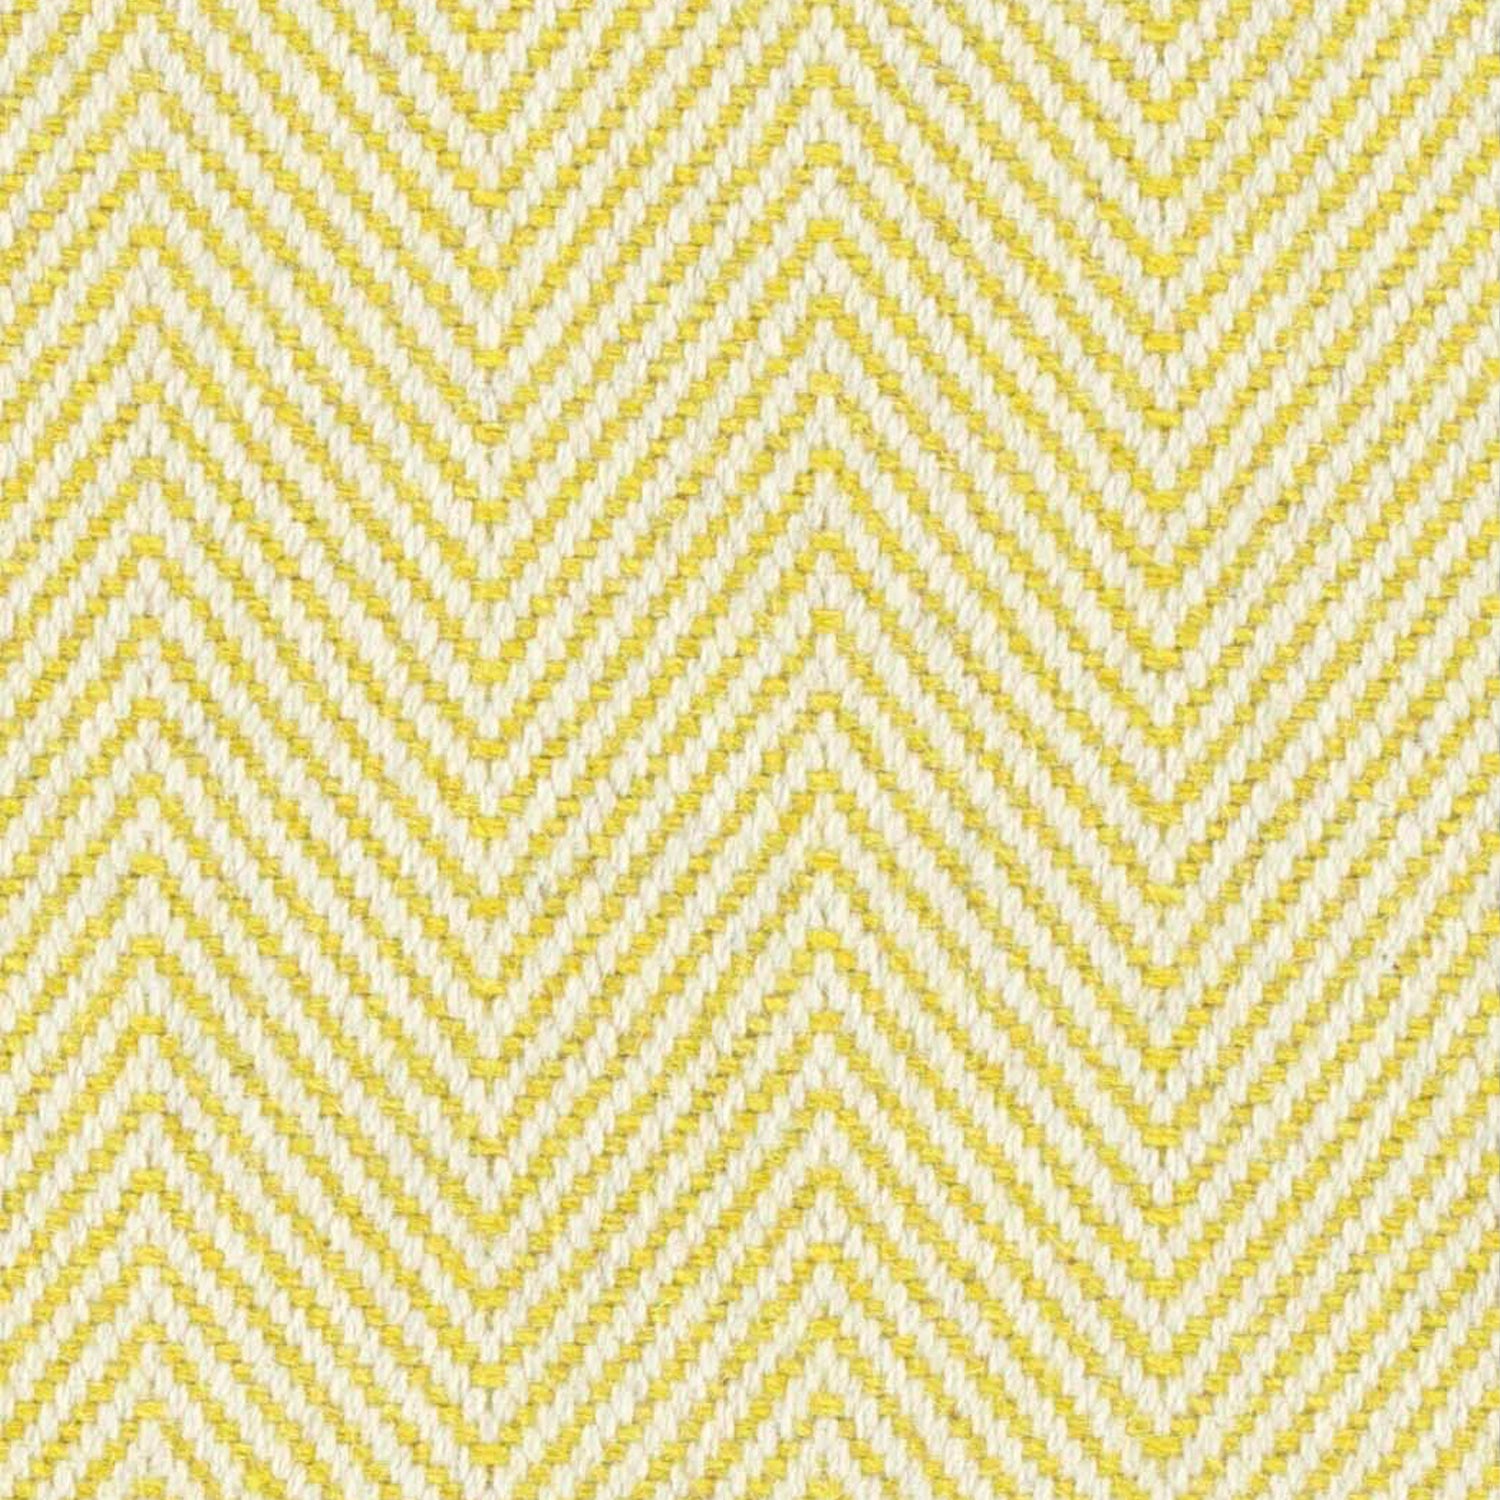 Wool broadloom carpet swatch in a herringbone weave in yellow and white.